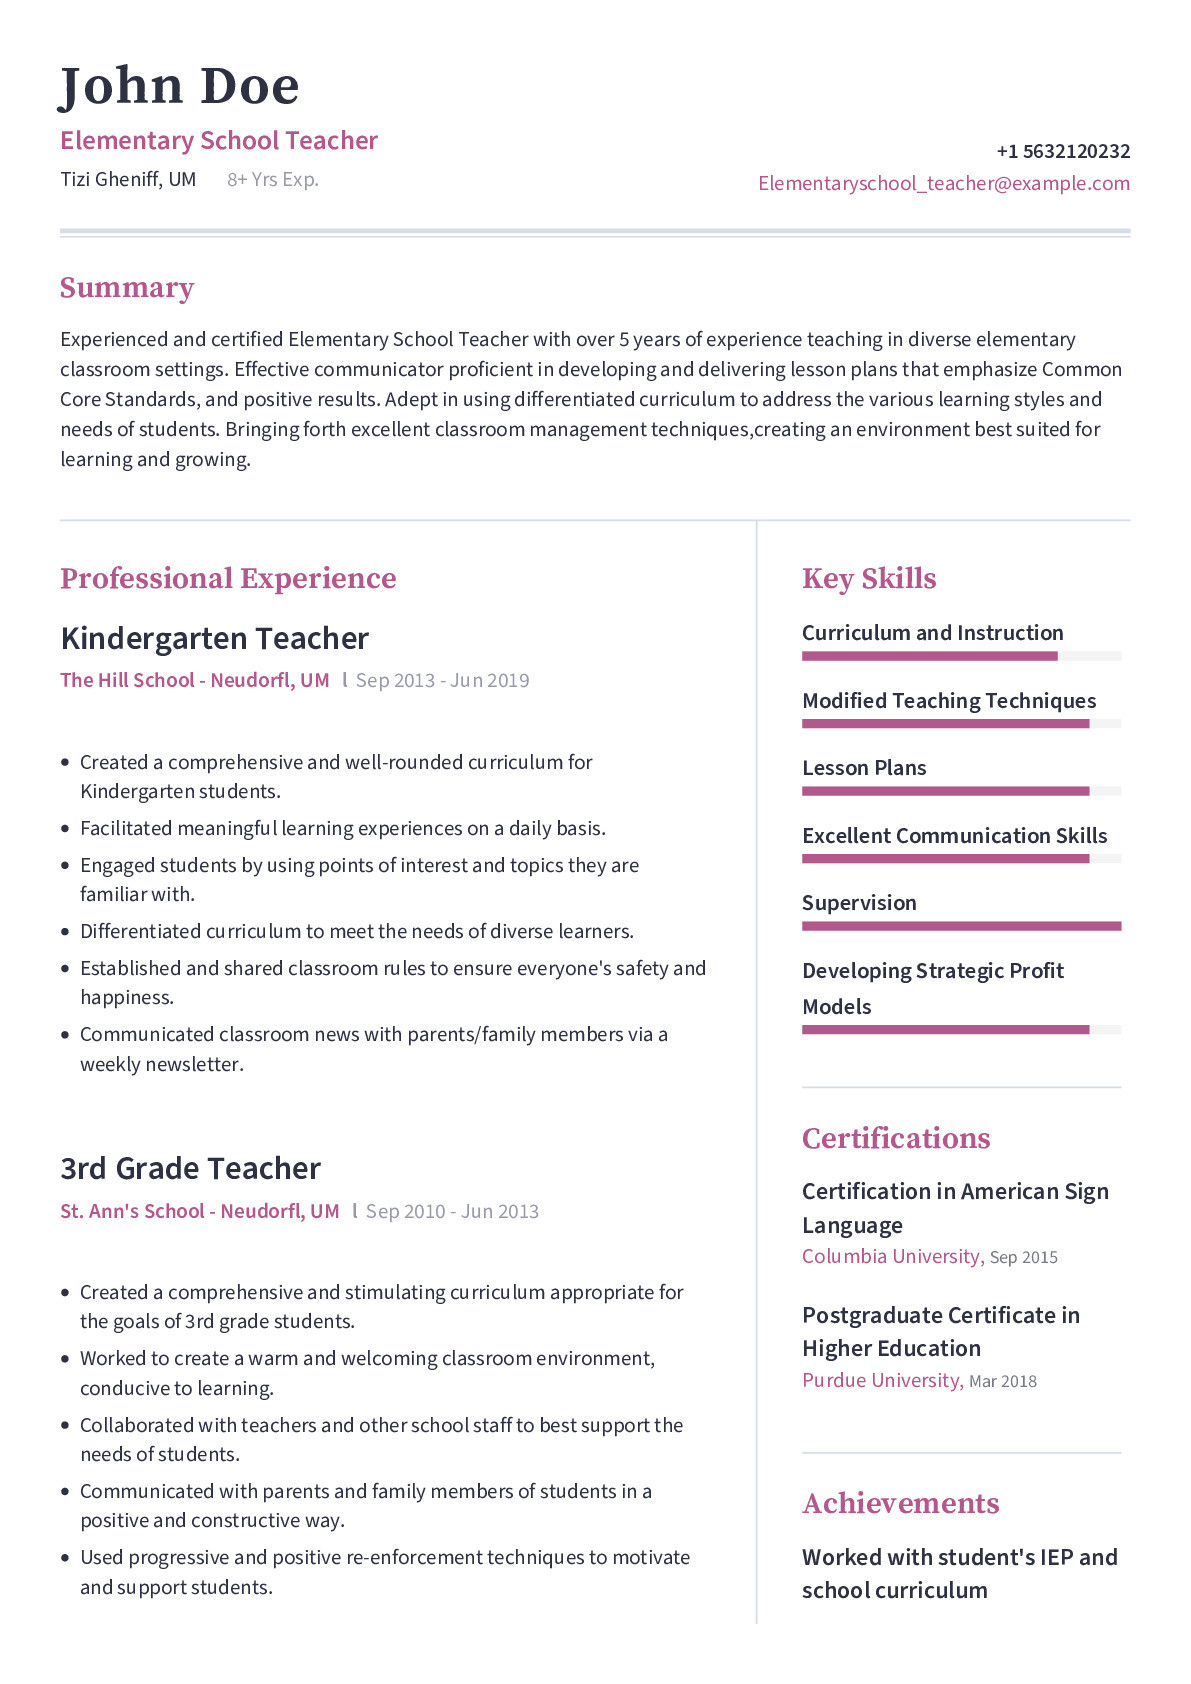 Elementary School Teacher Resume Objective Sample Elementary School Teacher Resume Example with Content Sample …